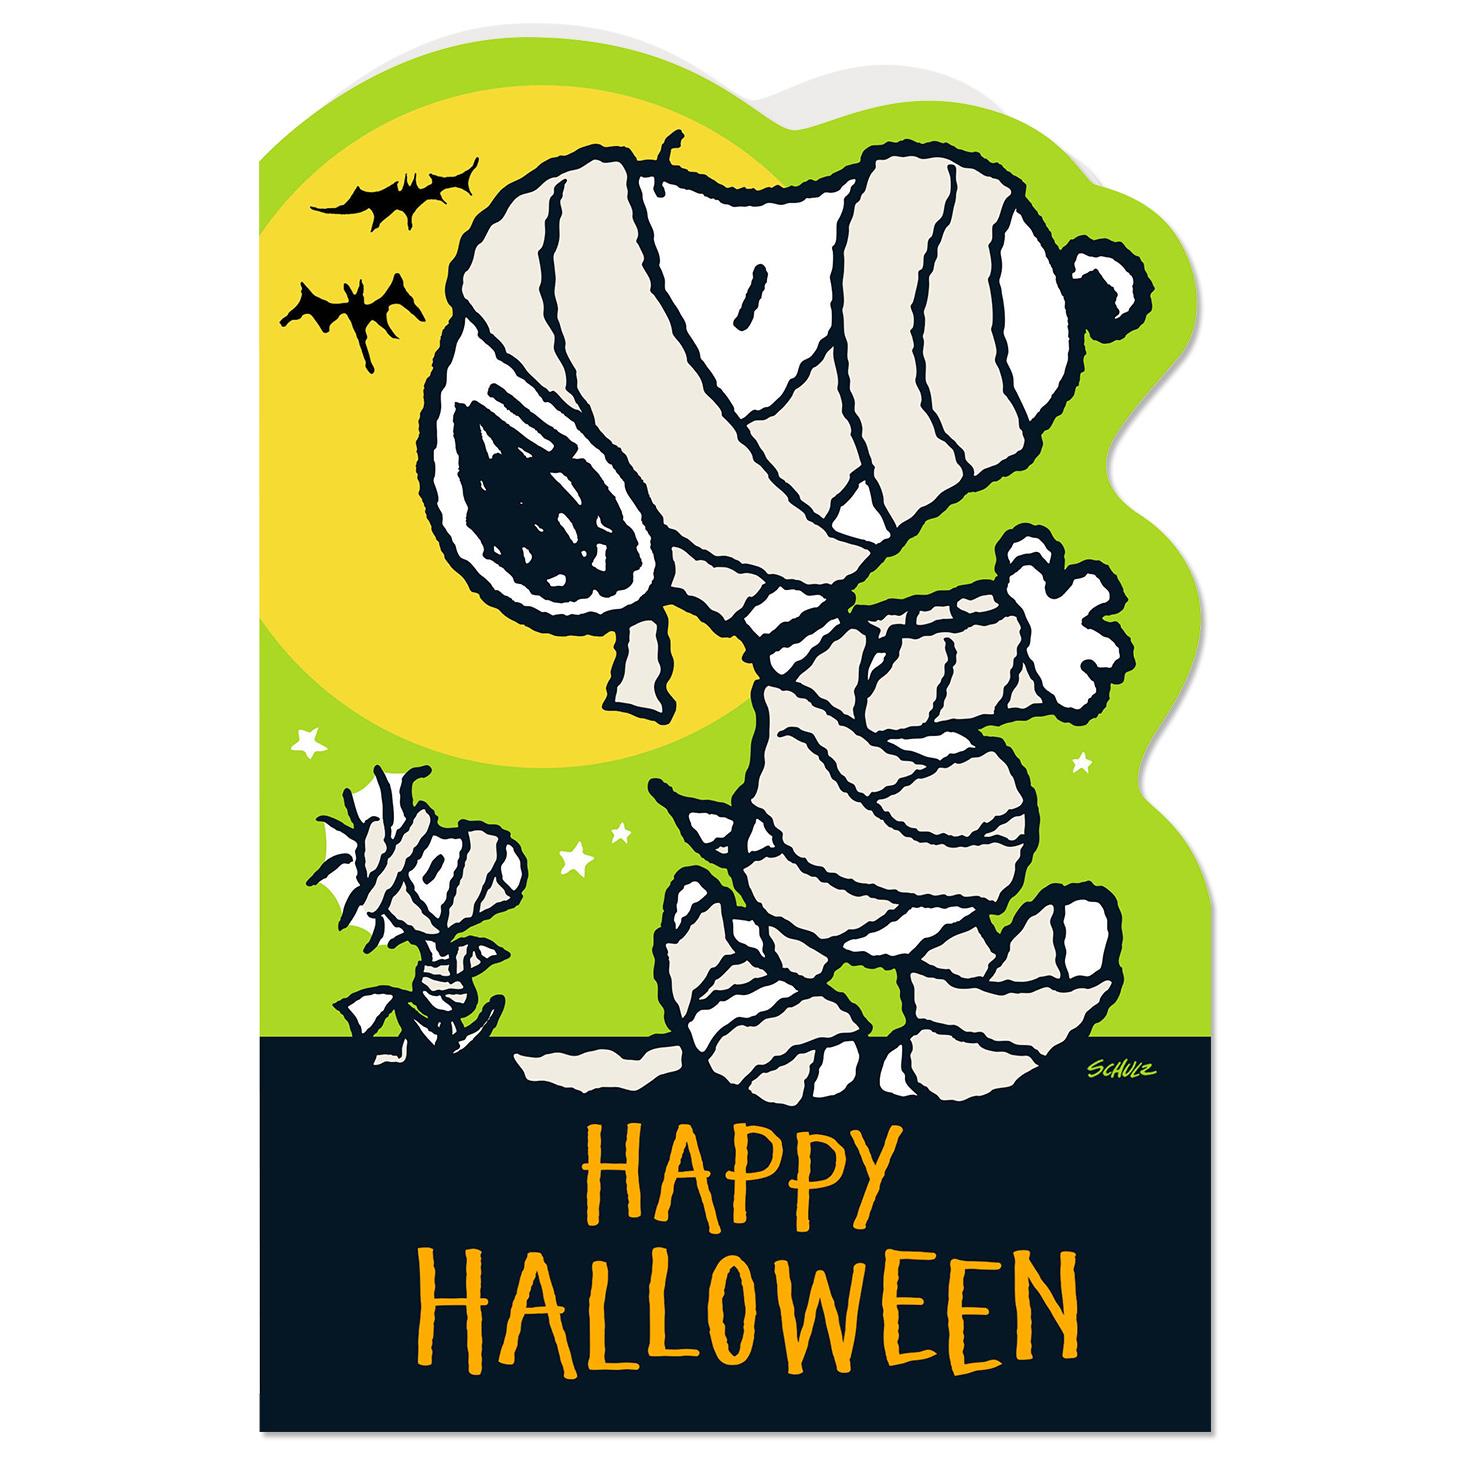 Peanuts® Mummy Snoopy and Woodstock Halloween Card - Greeting Cards - Hallmark1470 x 1470